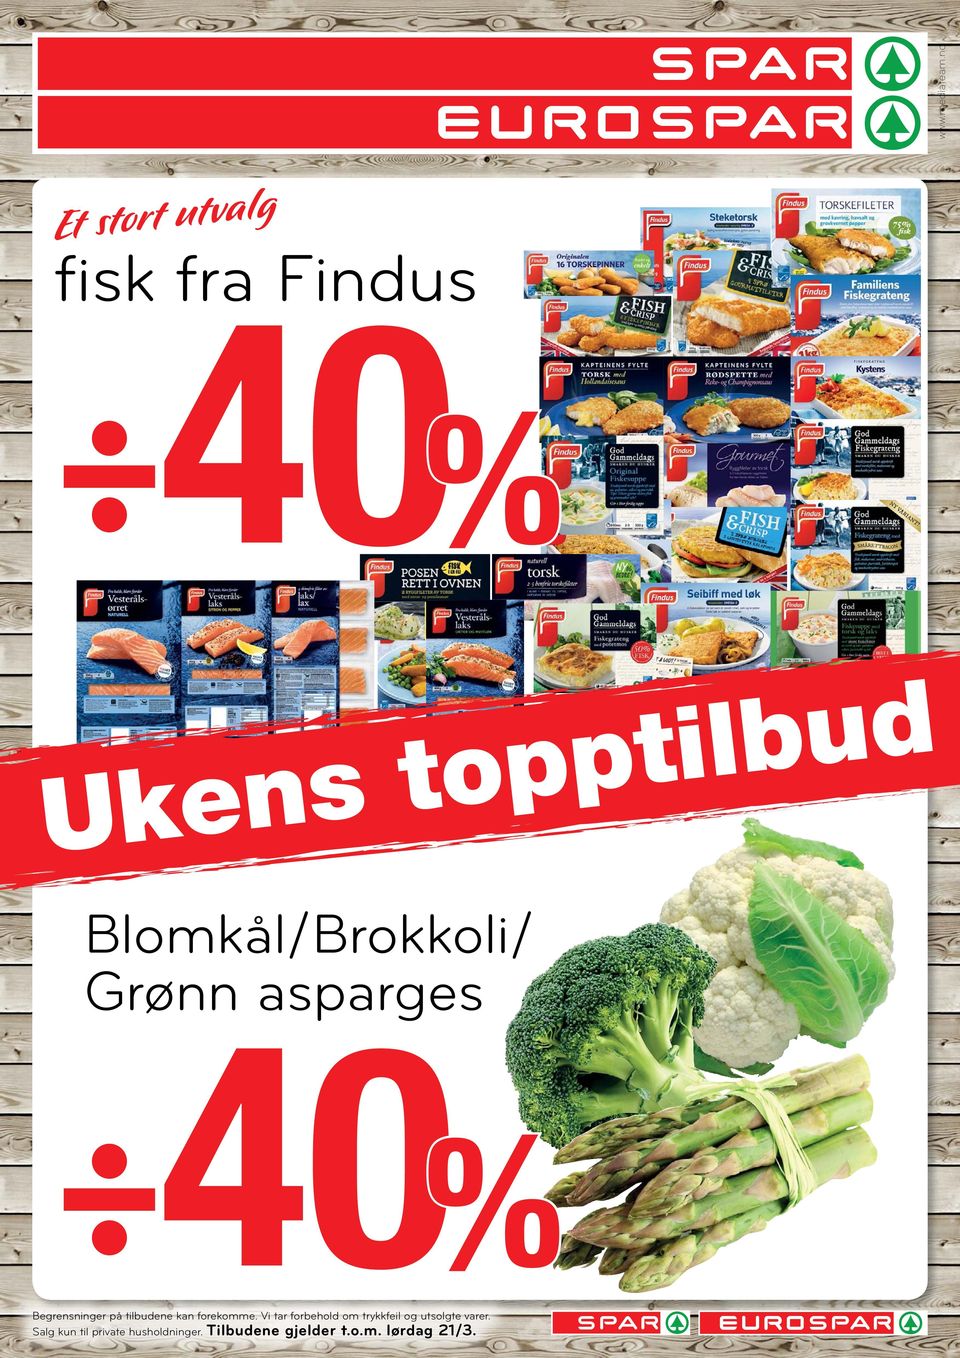 Uk Blomkål/Brokkoli/ Grønn asparges 40% Begrensninger på tilbudene kan